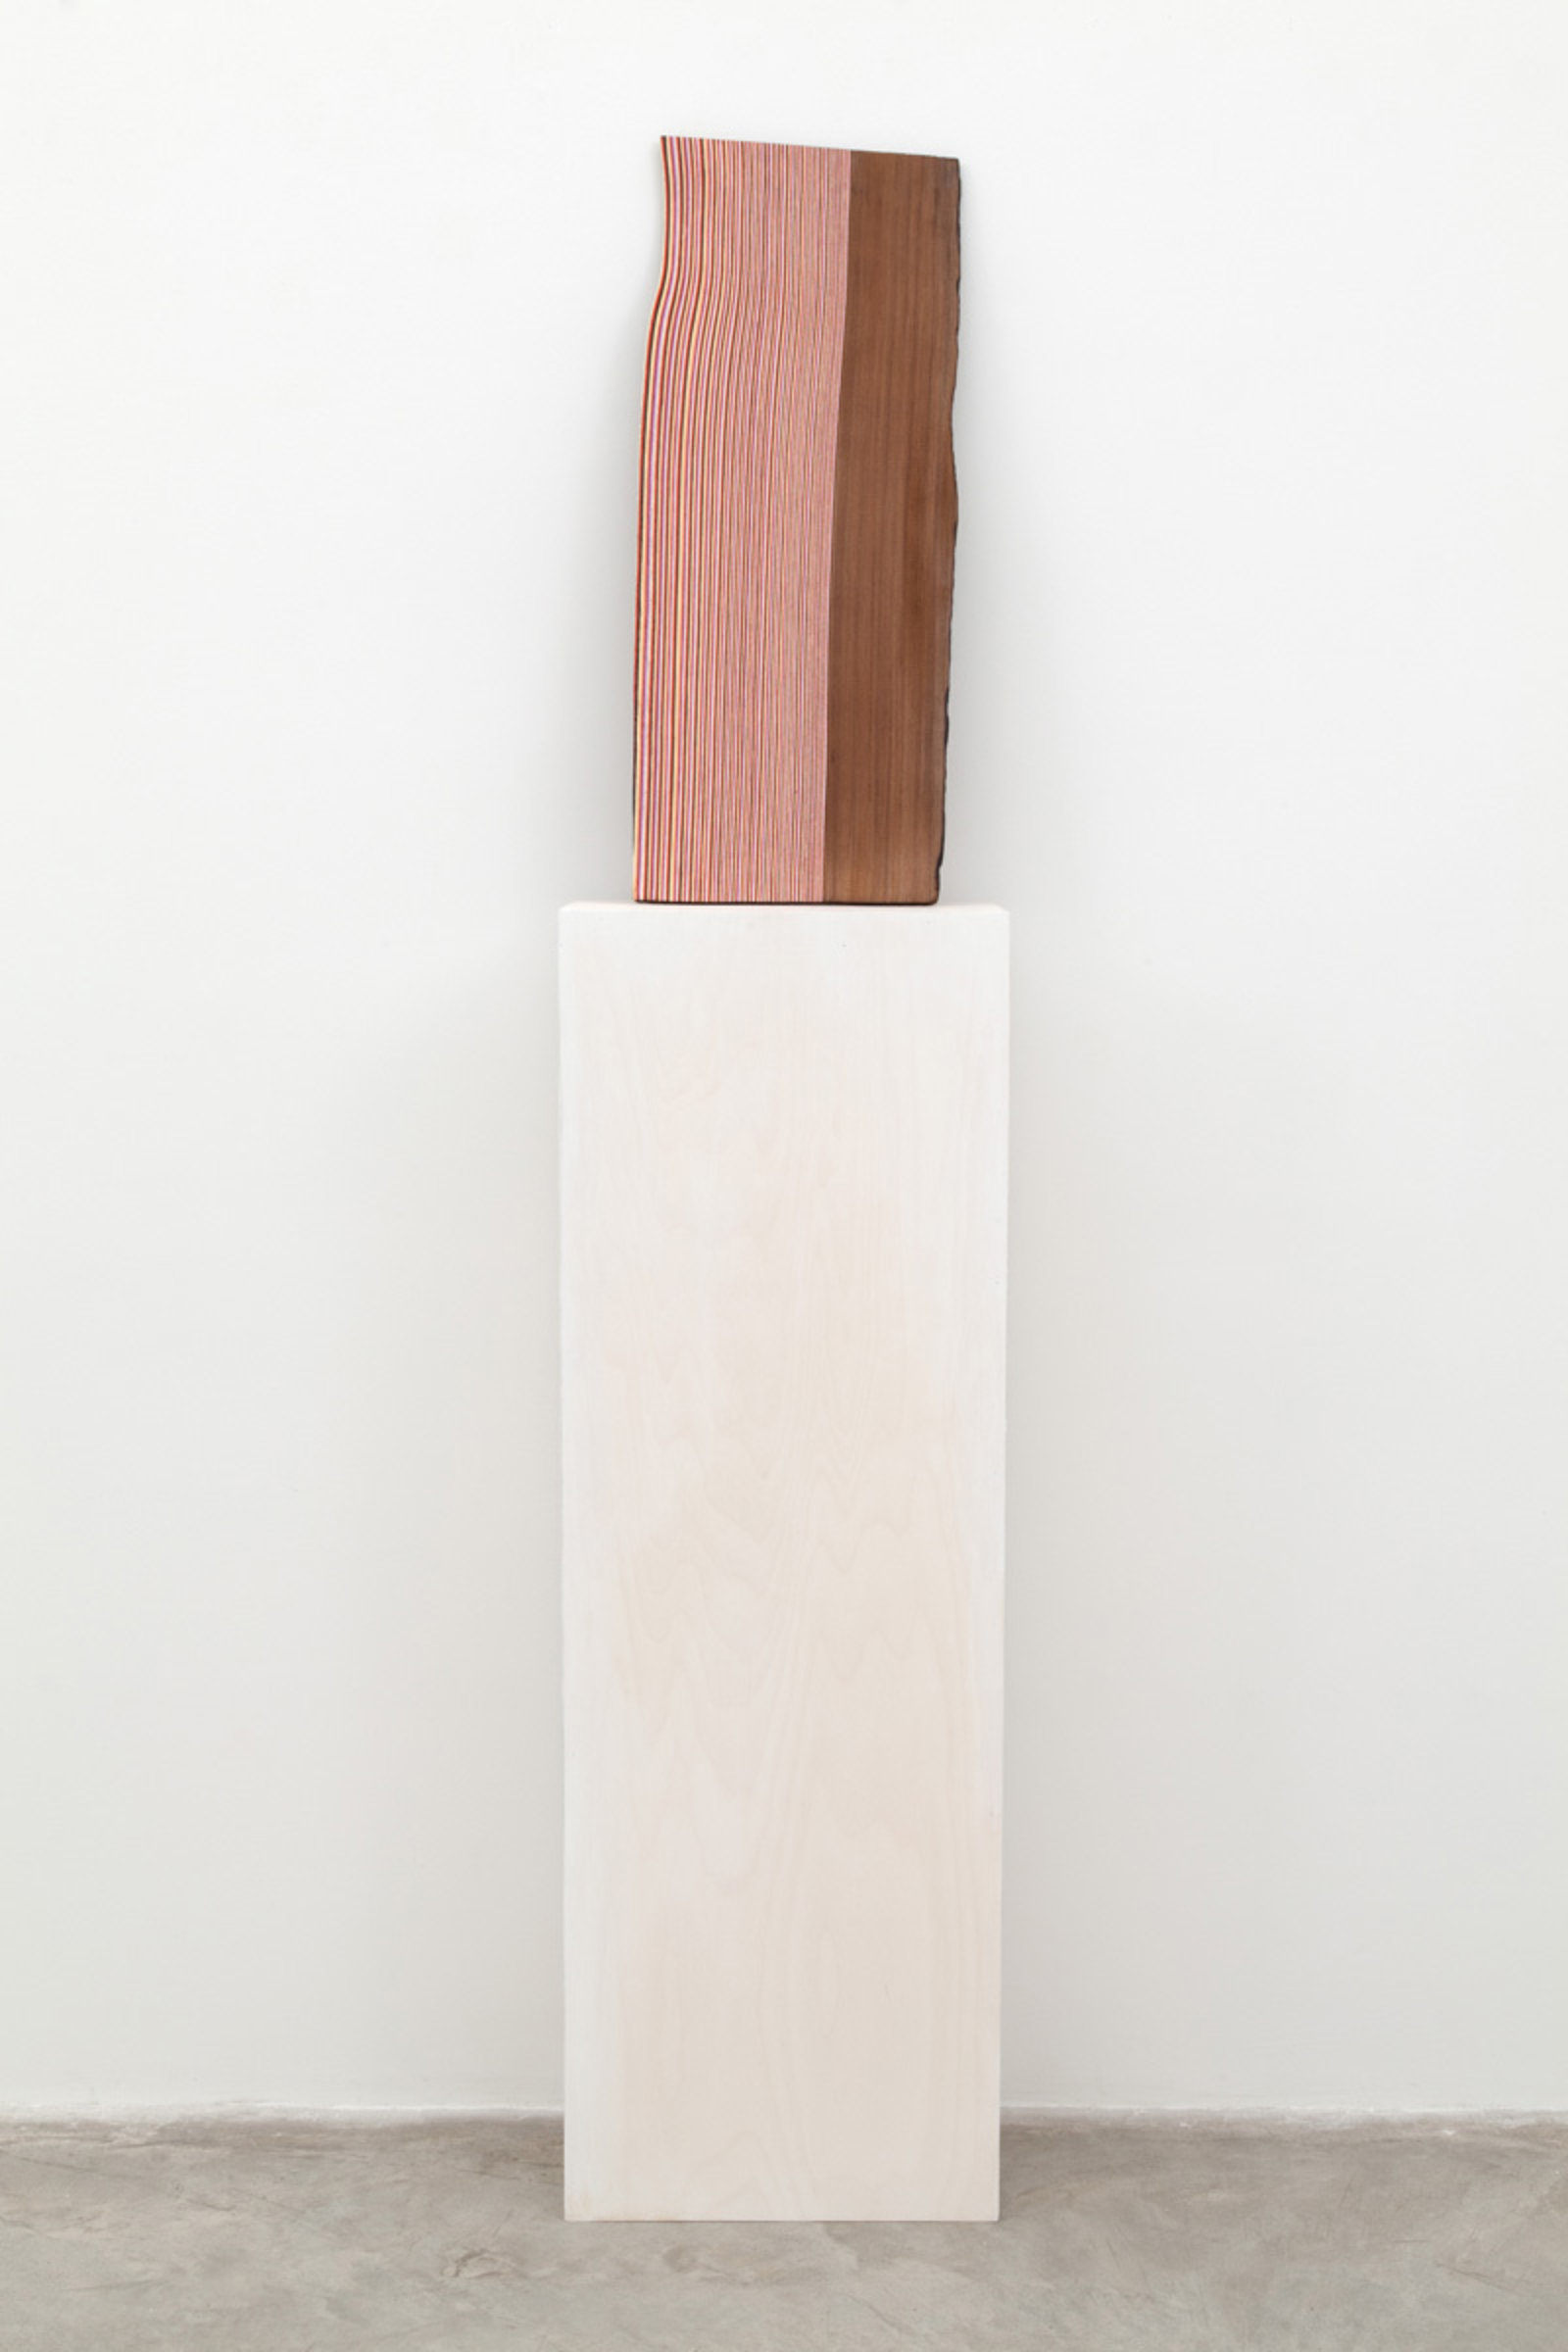 Brian Jungen, Shake, 2014, cedar, alkyd-resin enamel, 28 x 12 x 1 in. (70 x 29 x 2 cm)